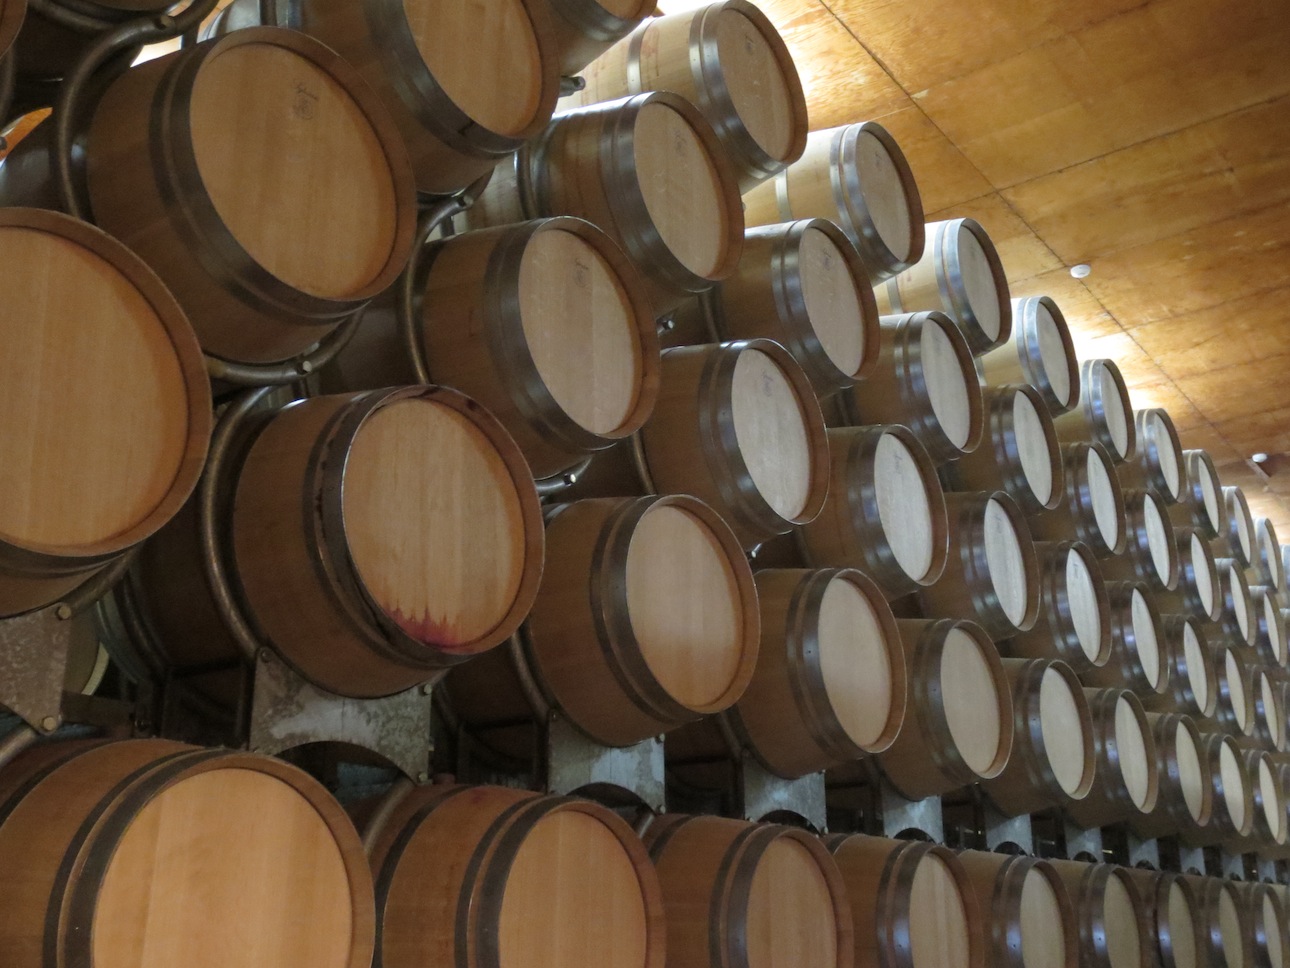 Wine barrels at Grgich Hills Winery